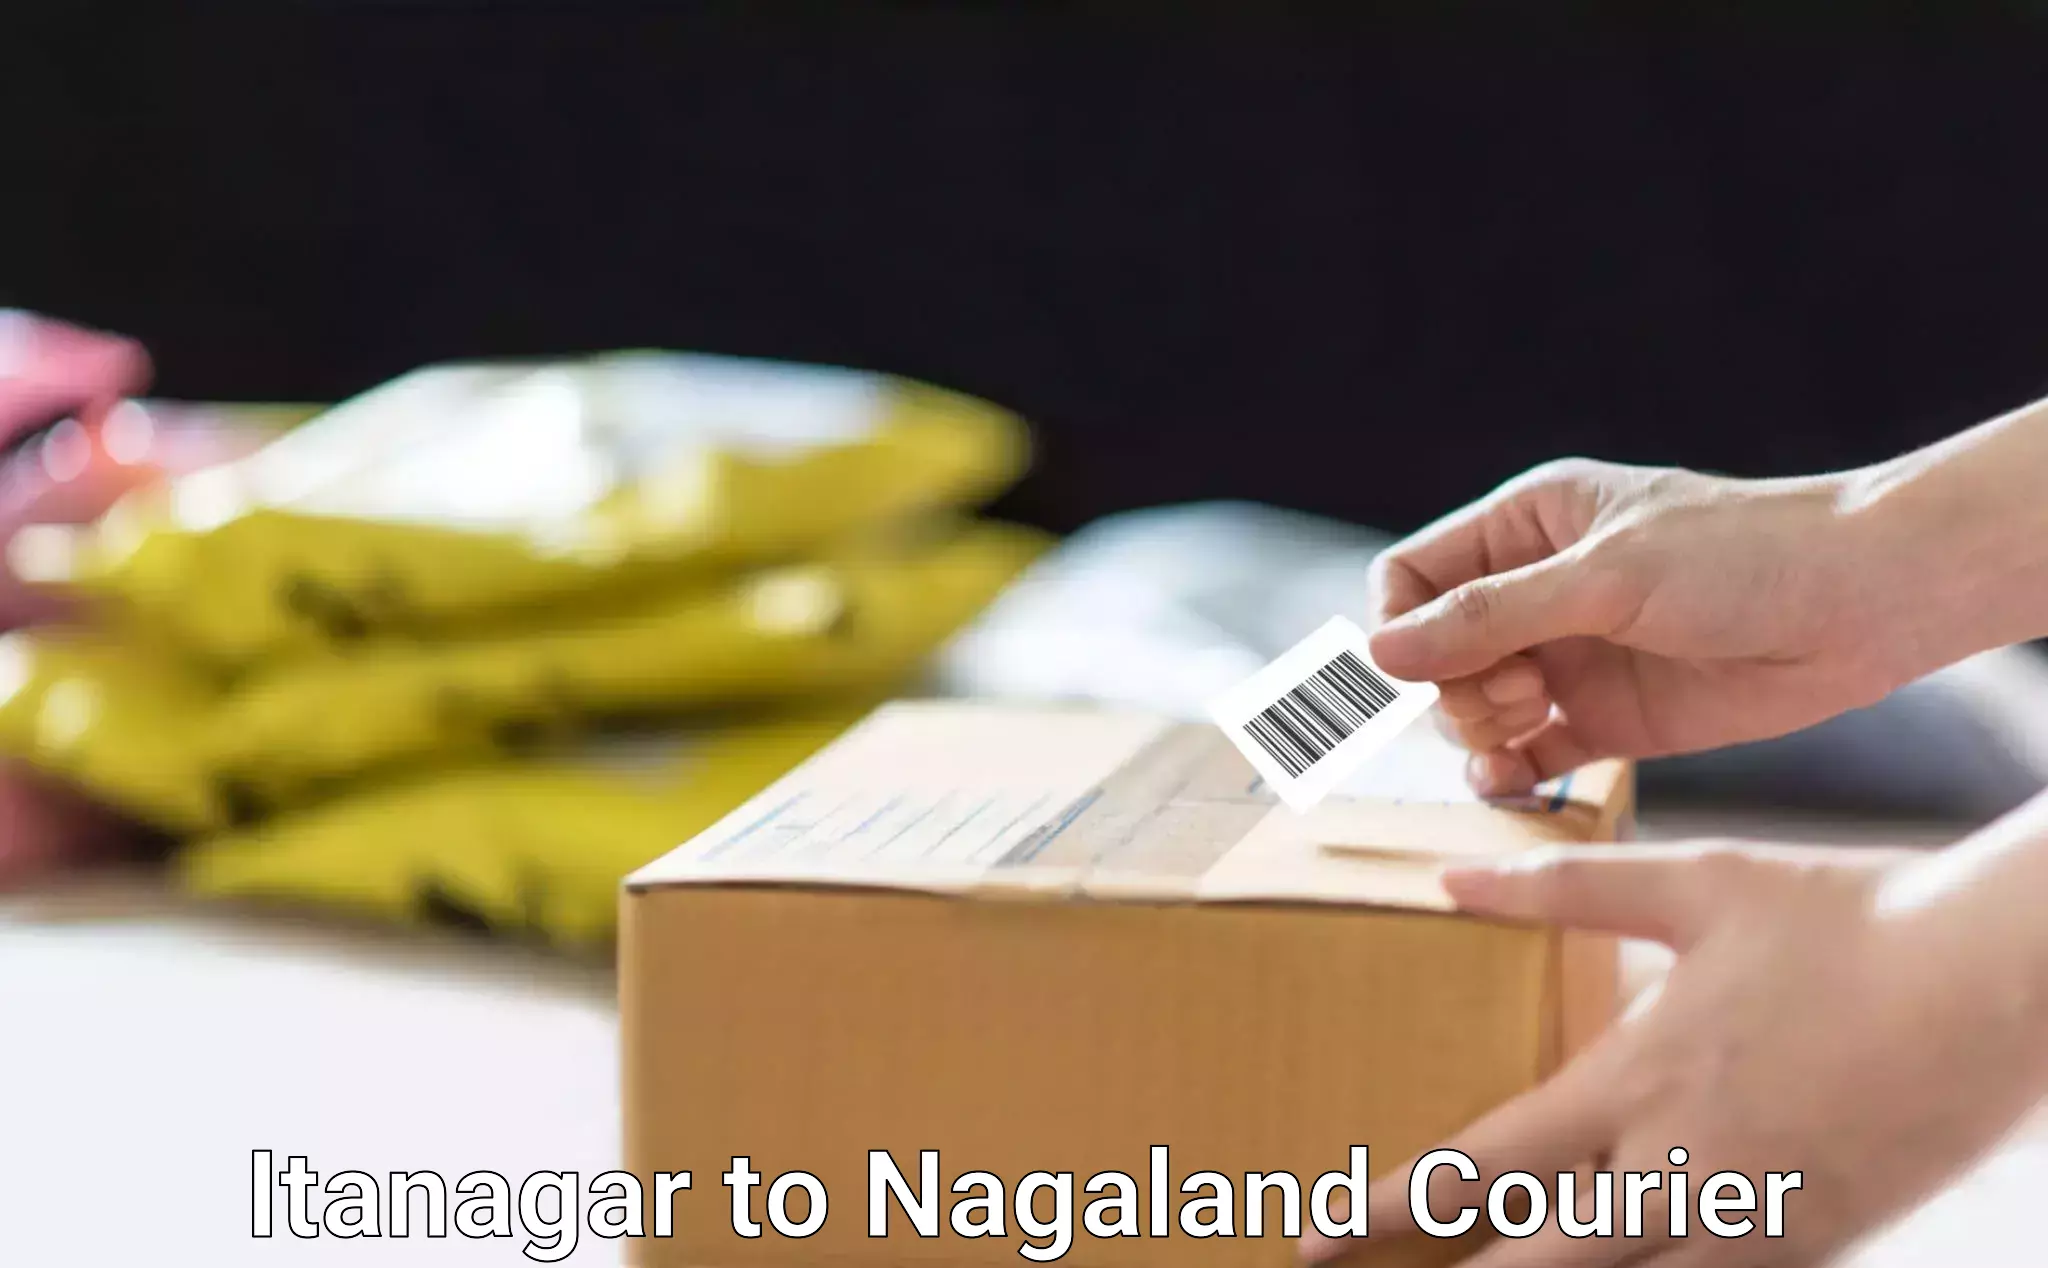 Nationwide courier service Itanagar to Nagaland